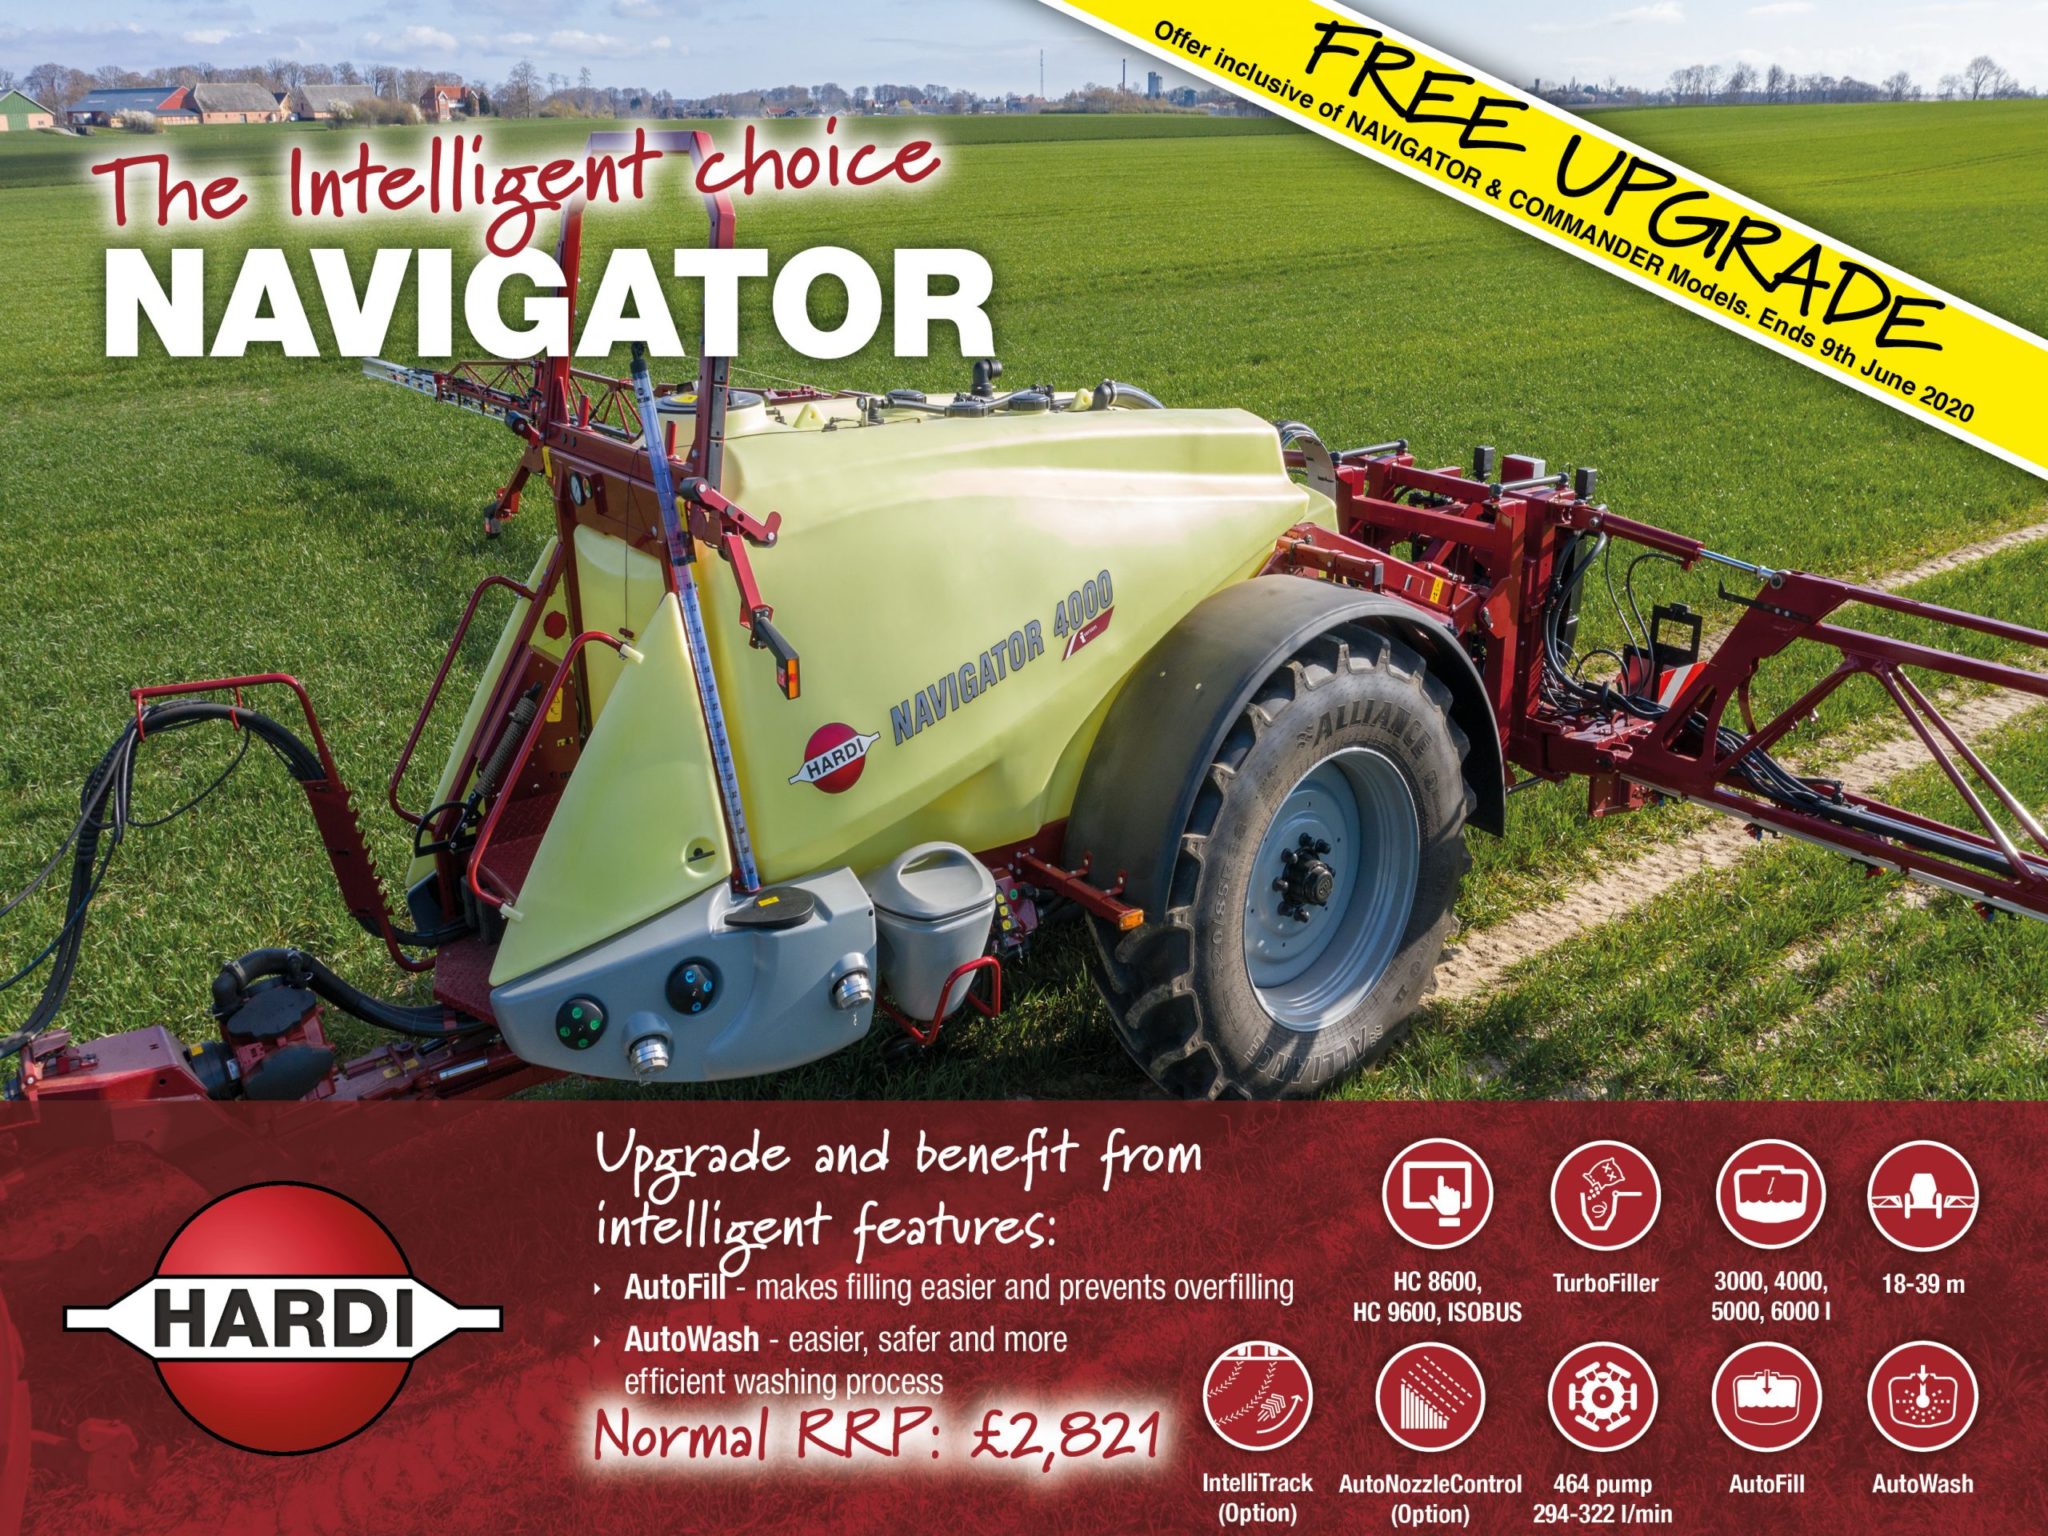 Hardi Navigator - Free Upgrade